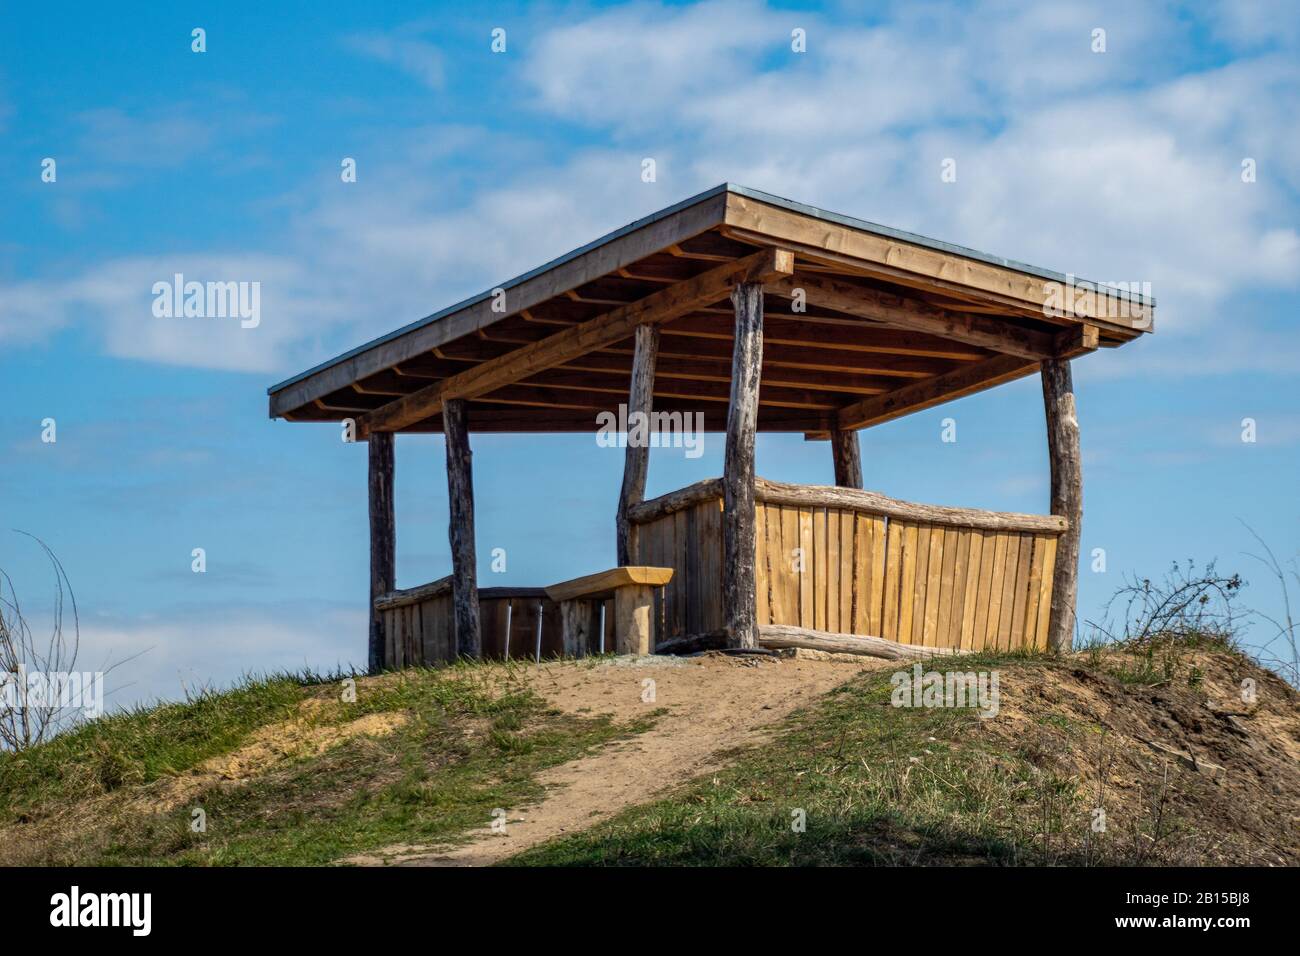 The new wildlife observation hut at nature reserve Schoenower Heide in Brandenburg, Germany Stock Photo